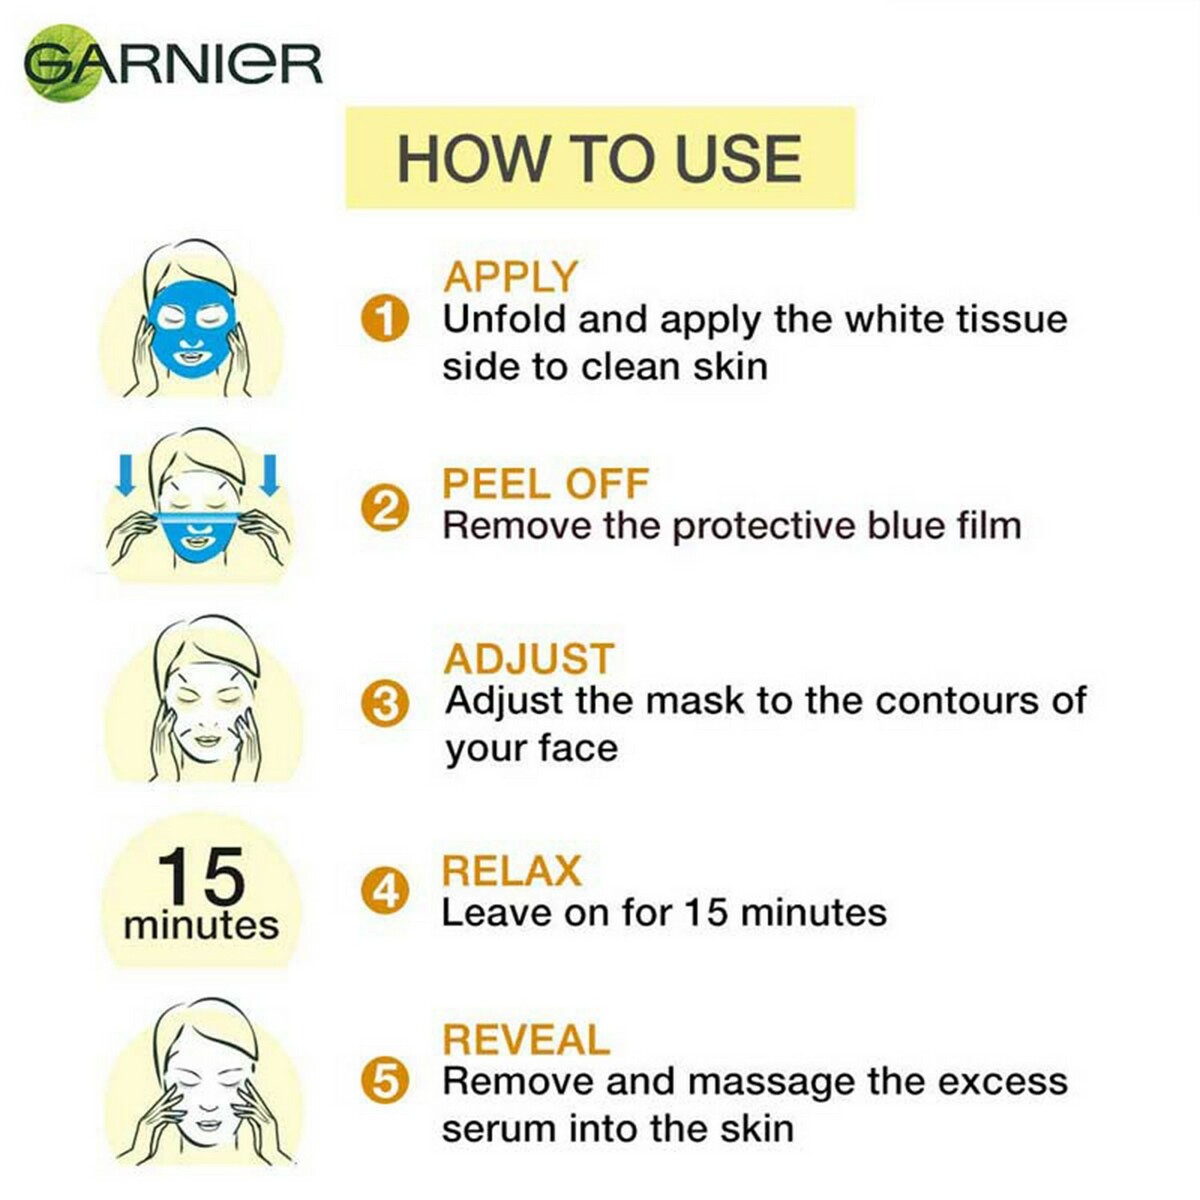 Garnier Skin  Mask Bright Yellow 32g